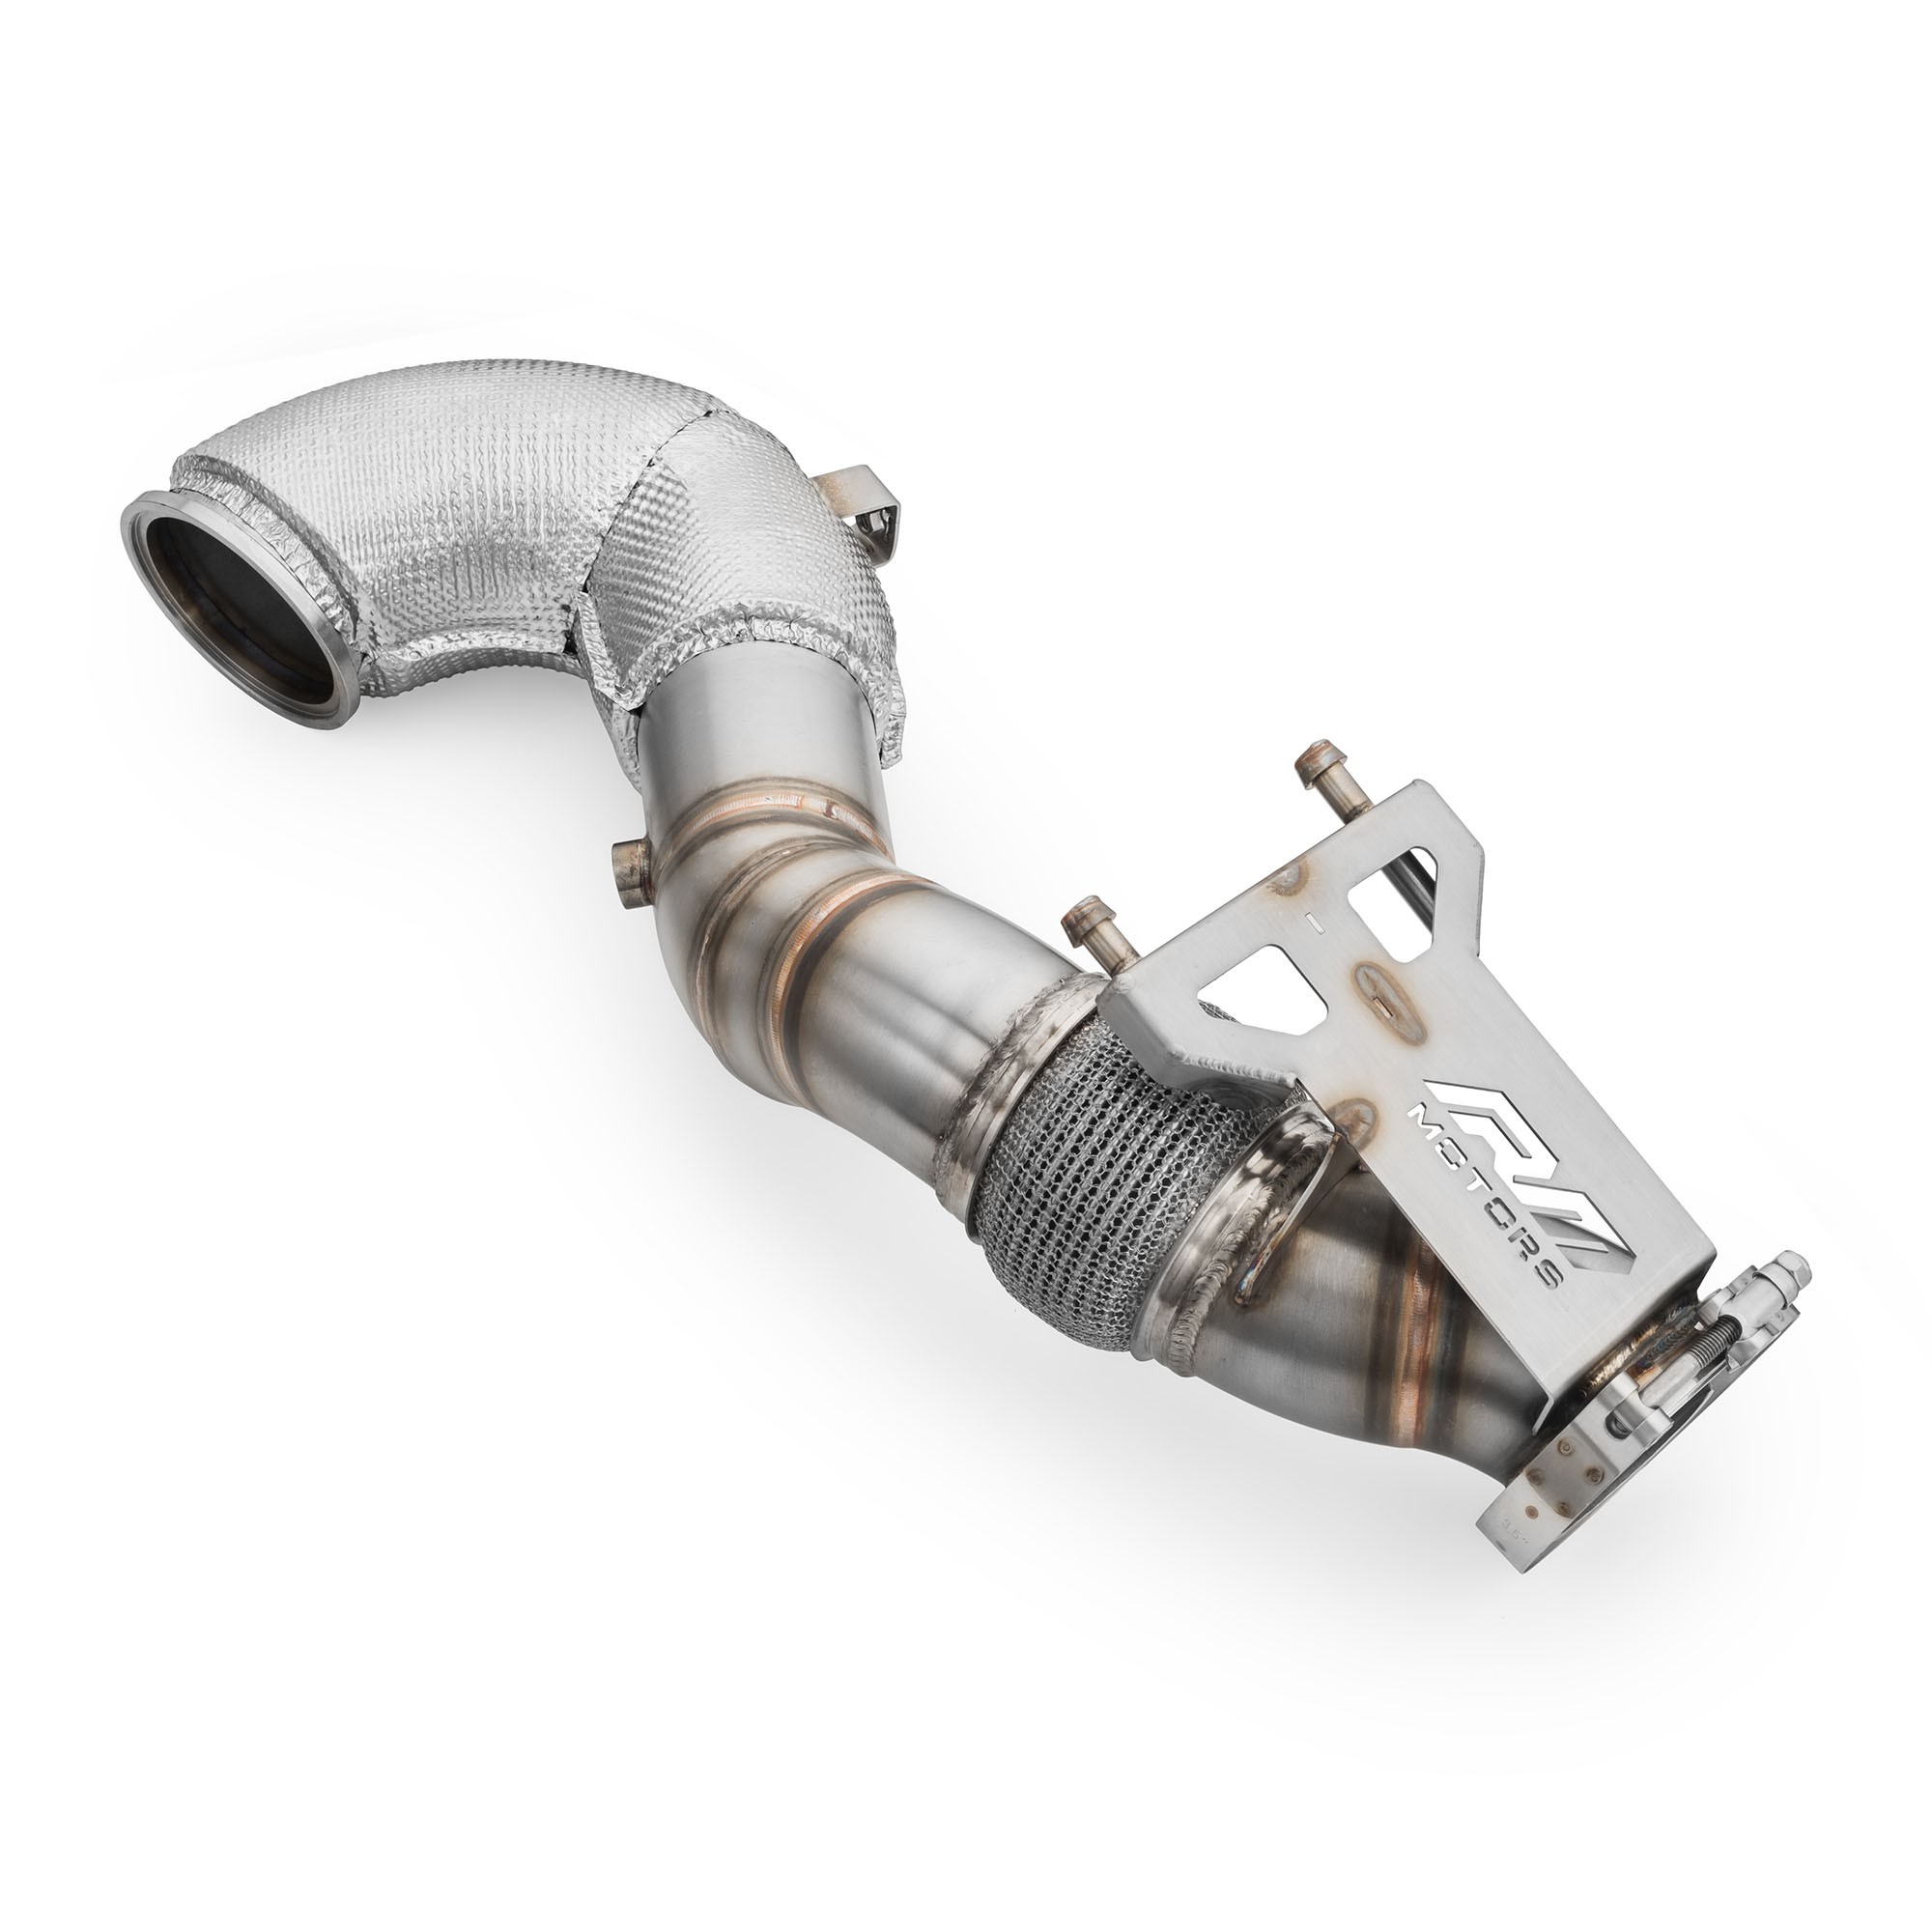 AUDI TTRS 2.5 TFSI Downpipe mit Hitzeschild und Katalysatoren - RM Motors  Katalysator OBD